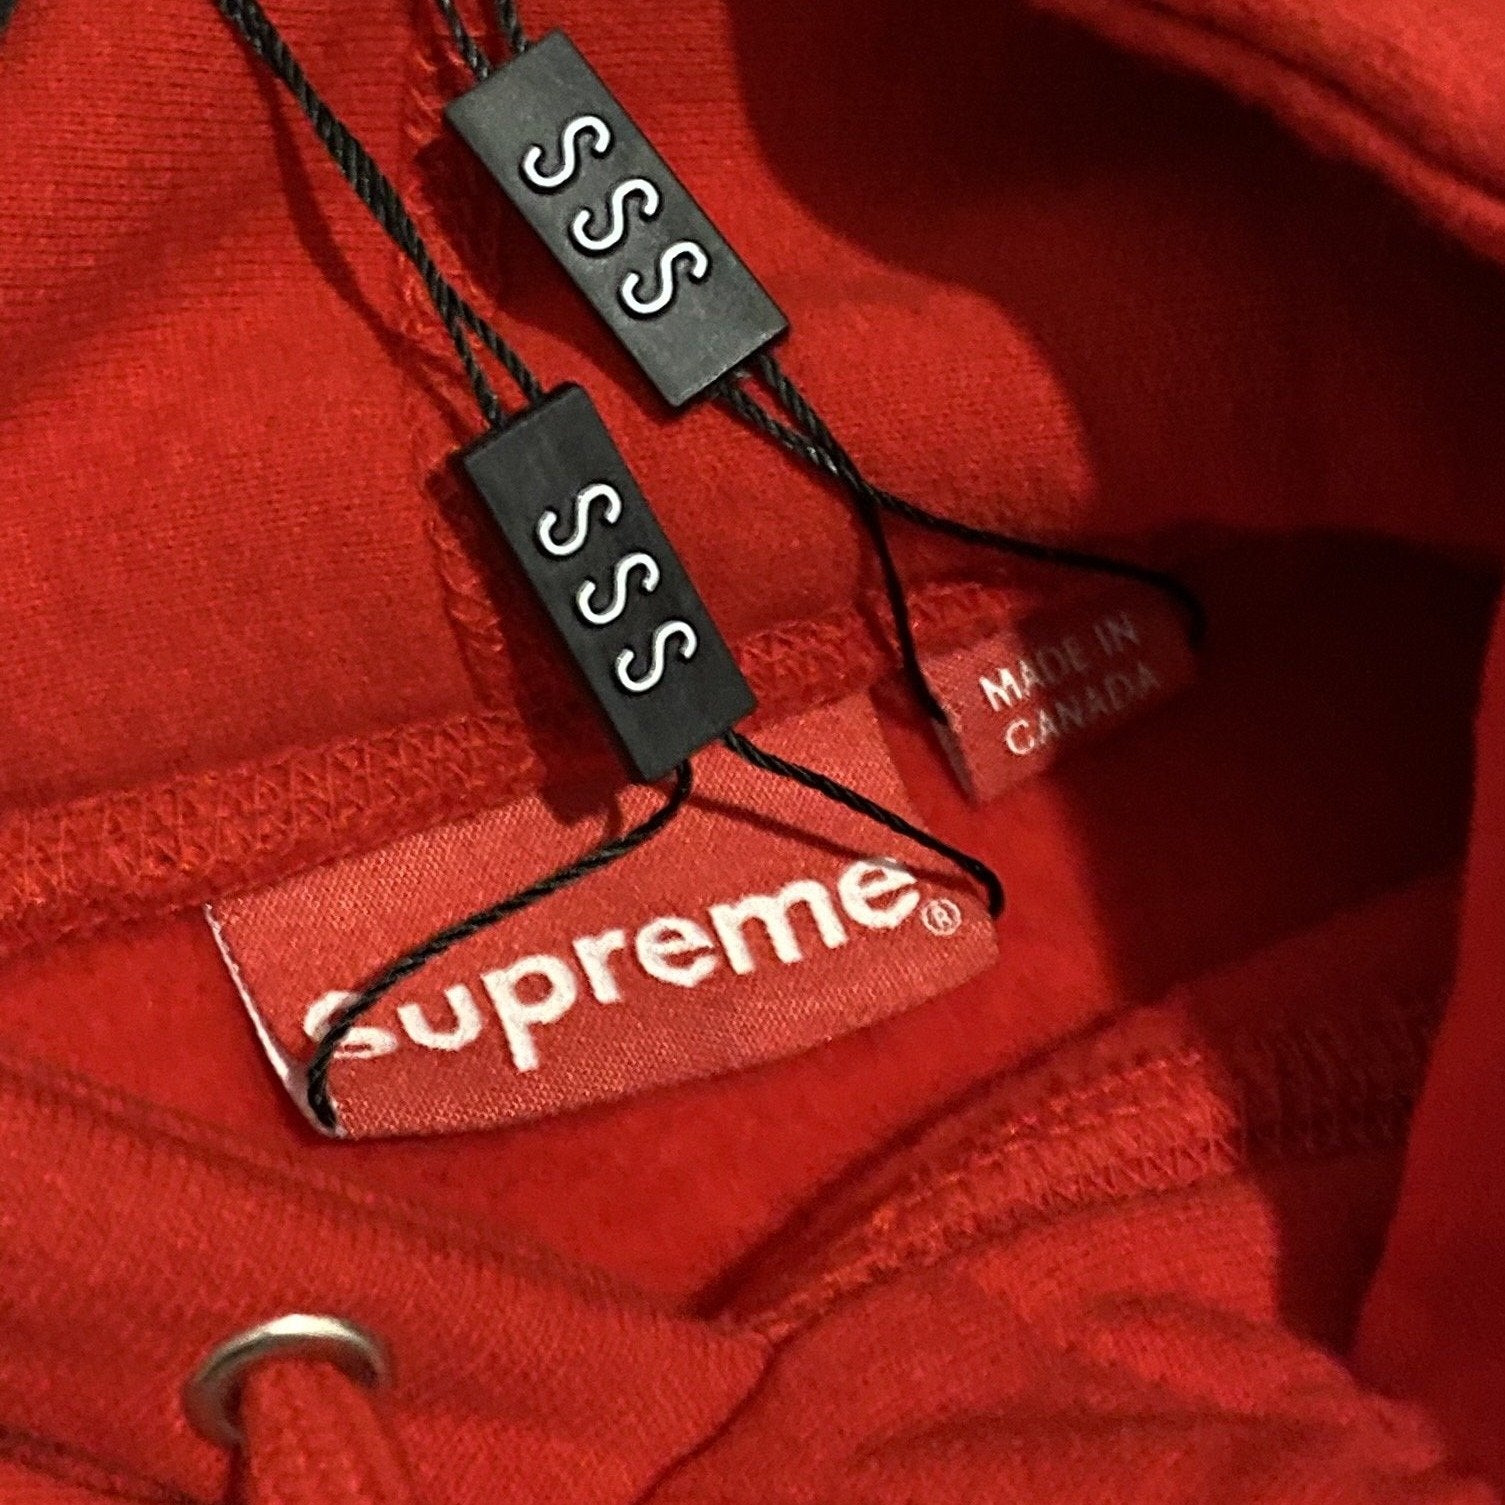 Red supreme hoodie medium box logo